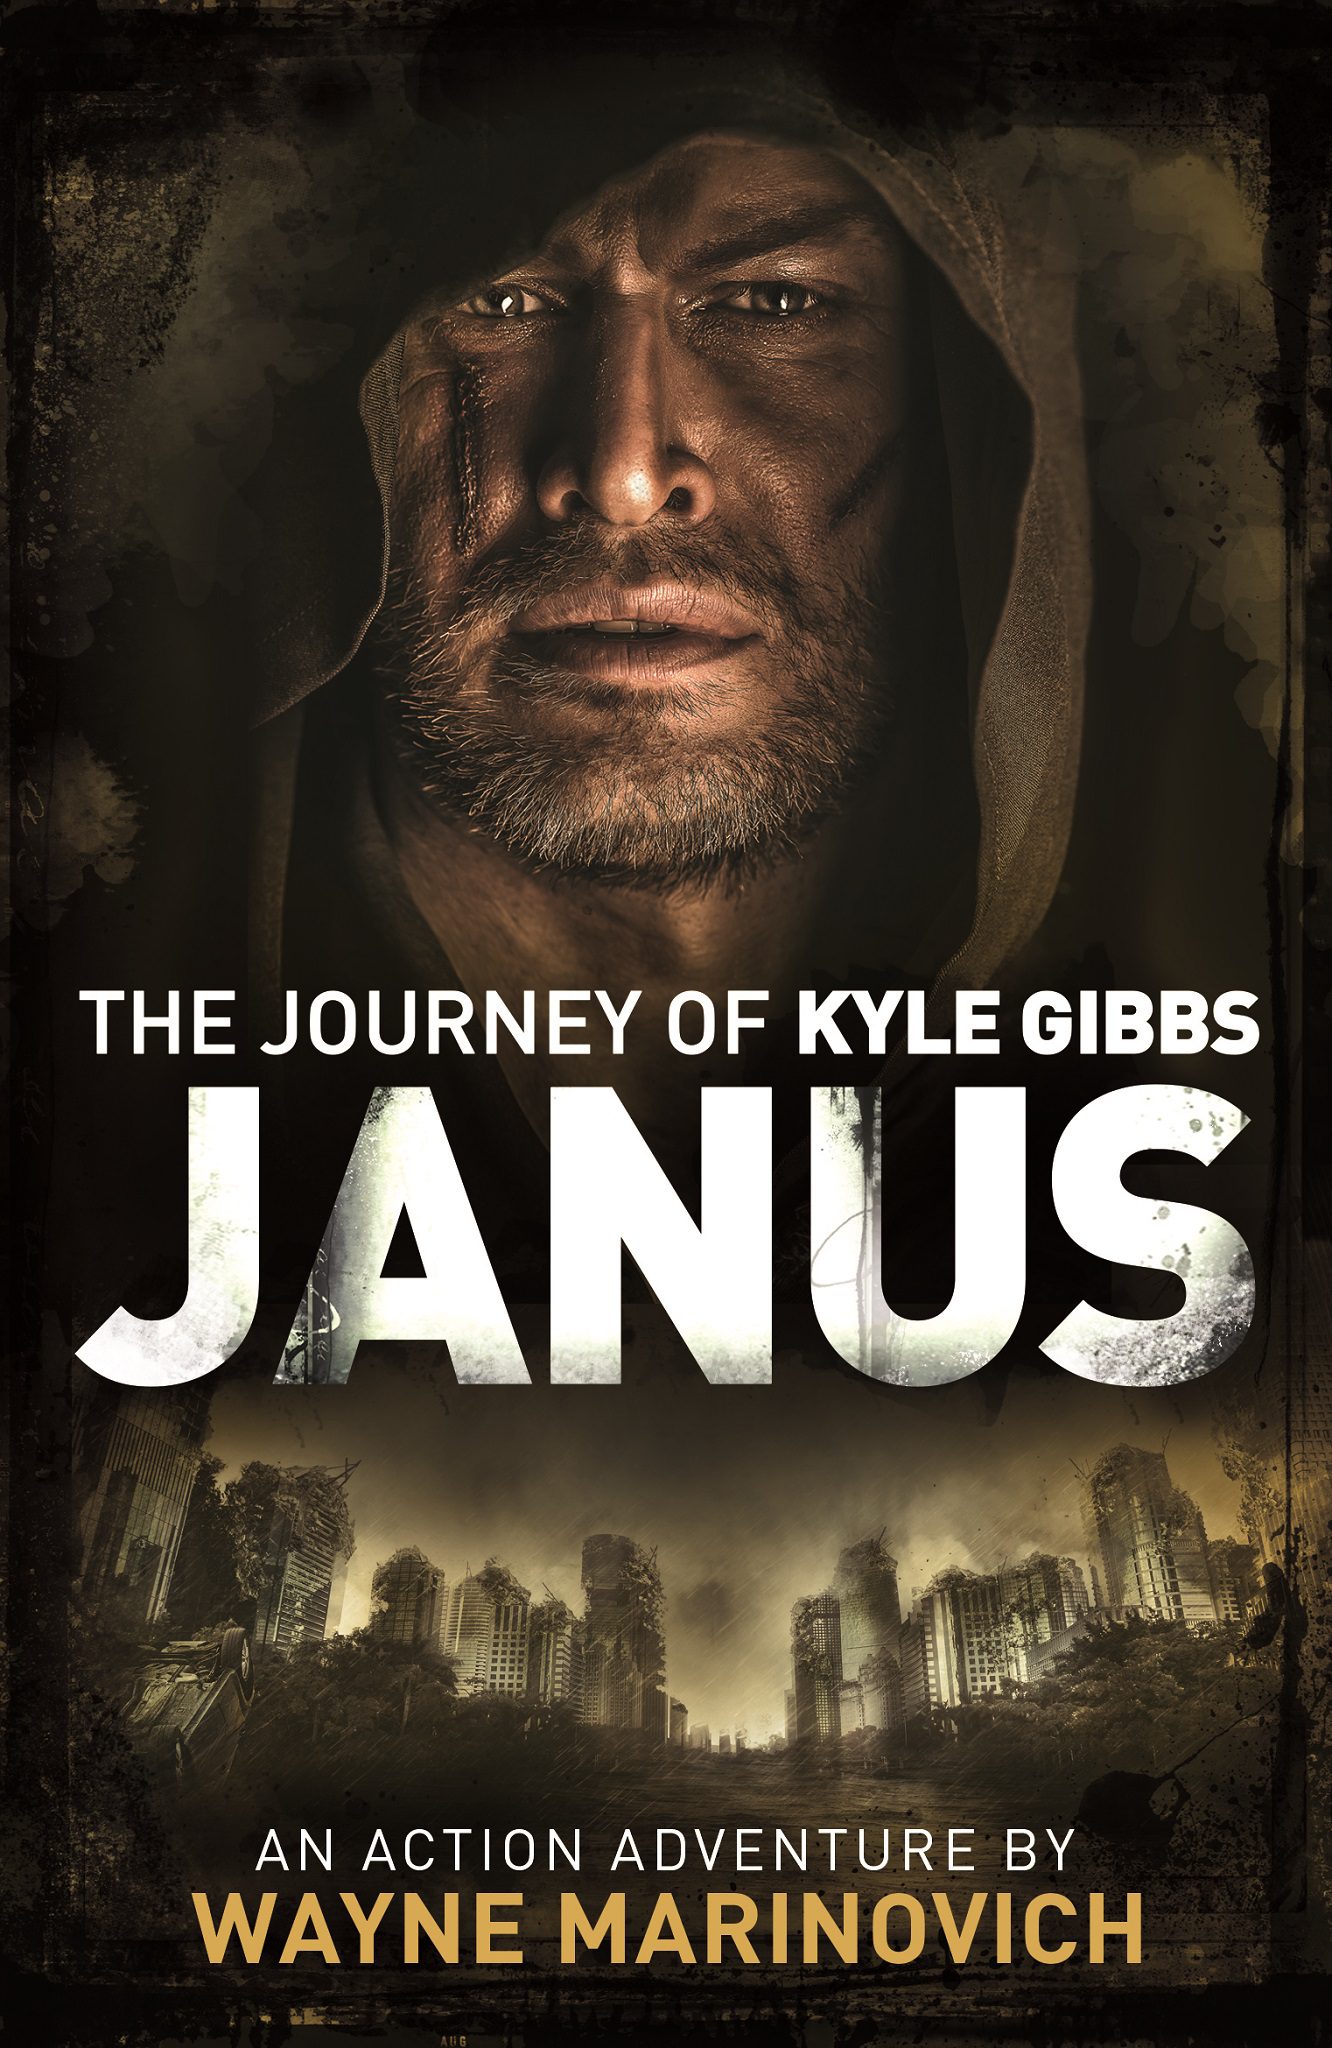 "Janus - The Kyle Gibbs Series - Wayne Marinovich"